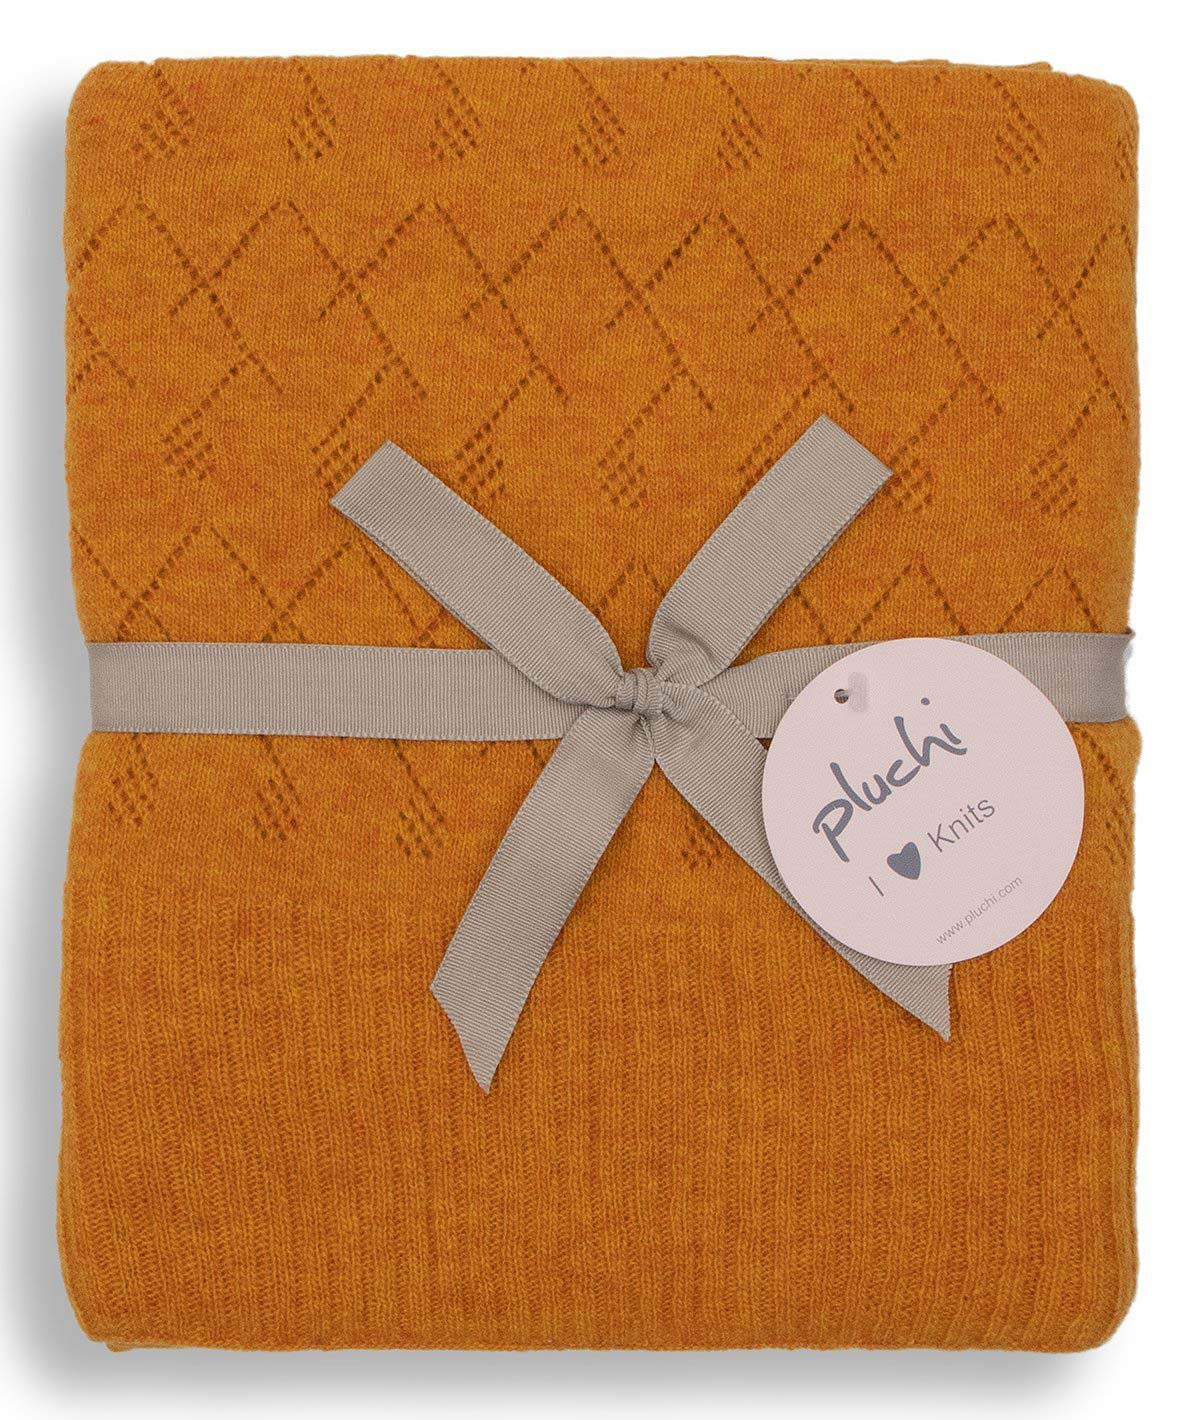 Colette - Light Orange Lambswool & Nylon Knitted Shawl Wrap